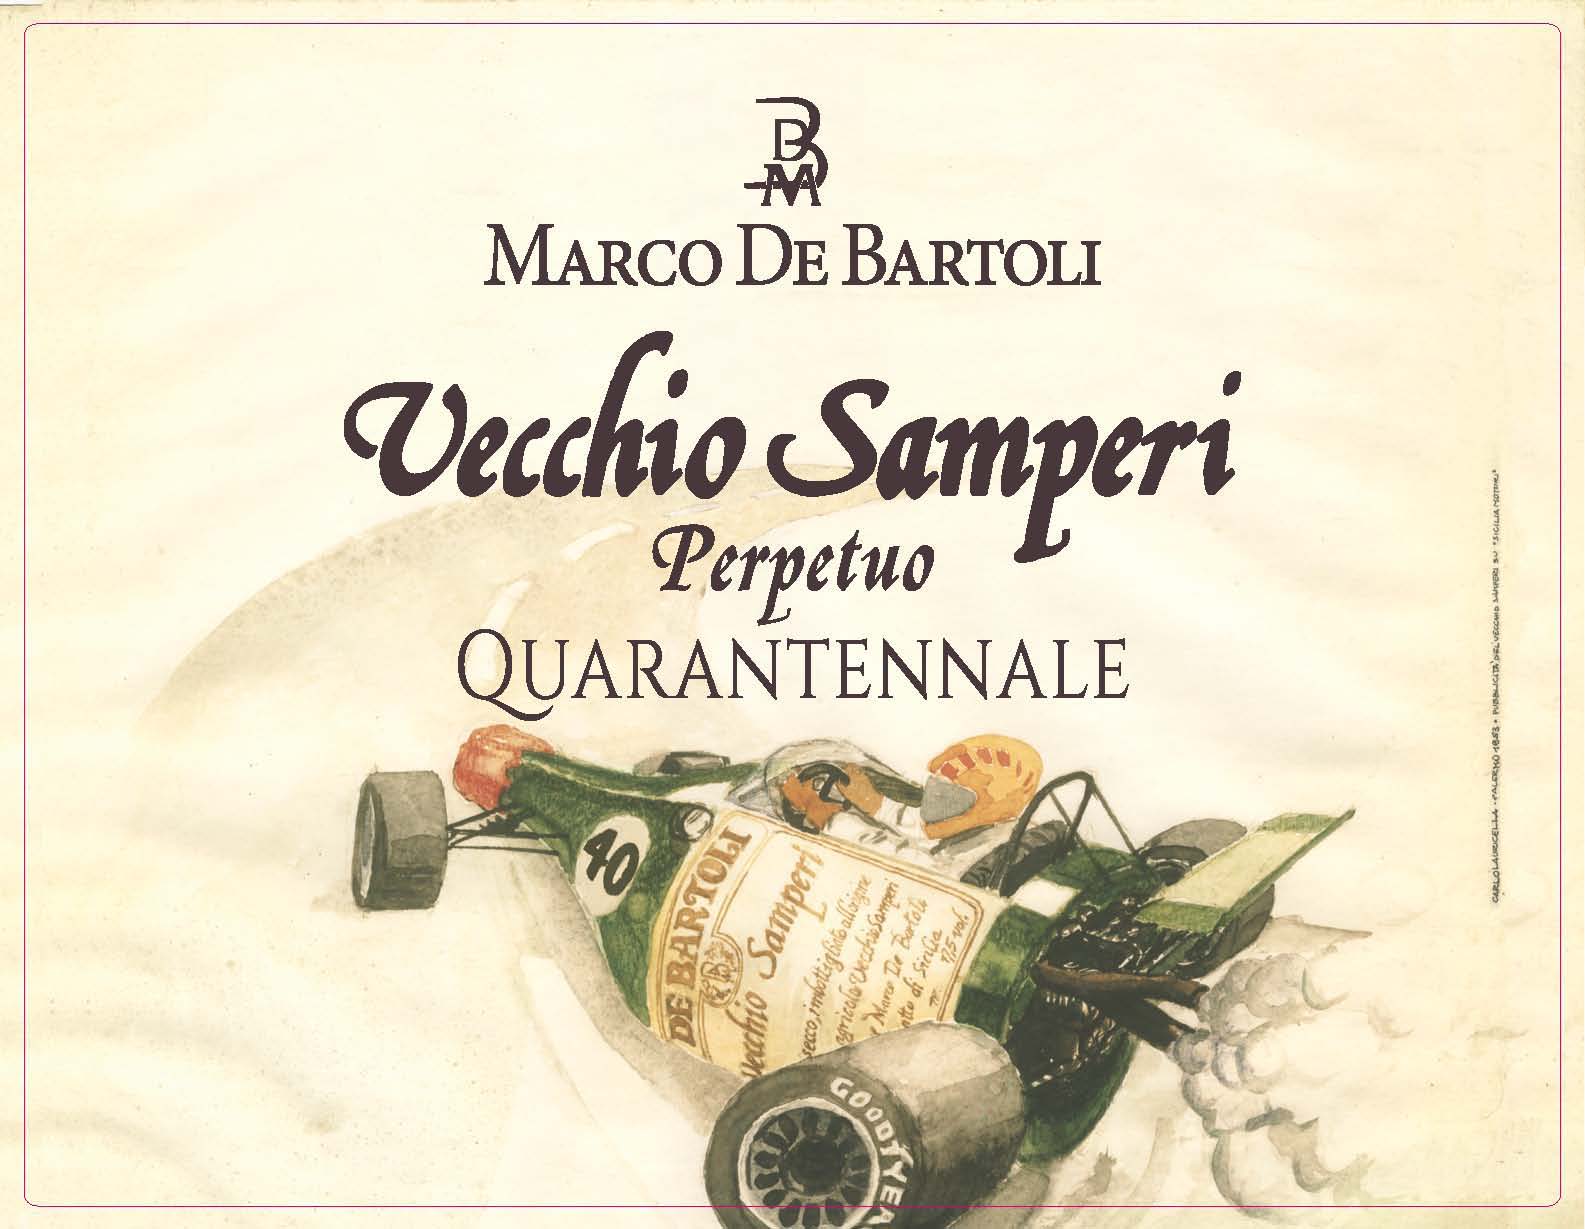 Vecchio Samperi Quarantennale Marco de Bartoli Vino Liquoroso